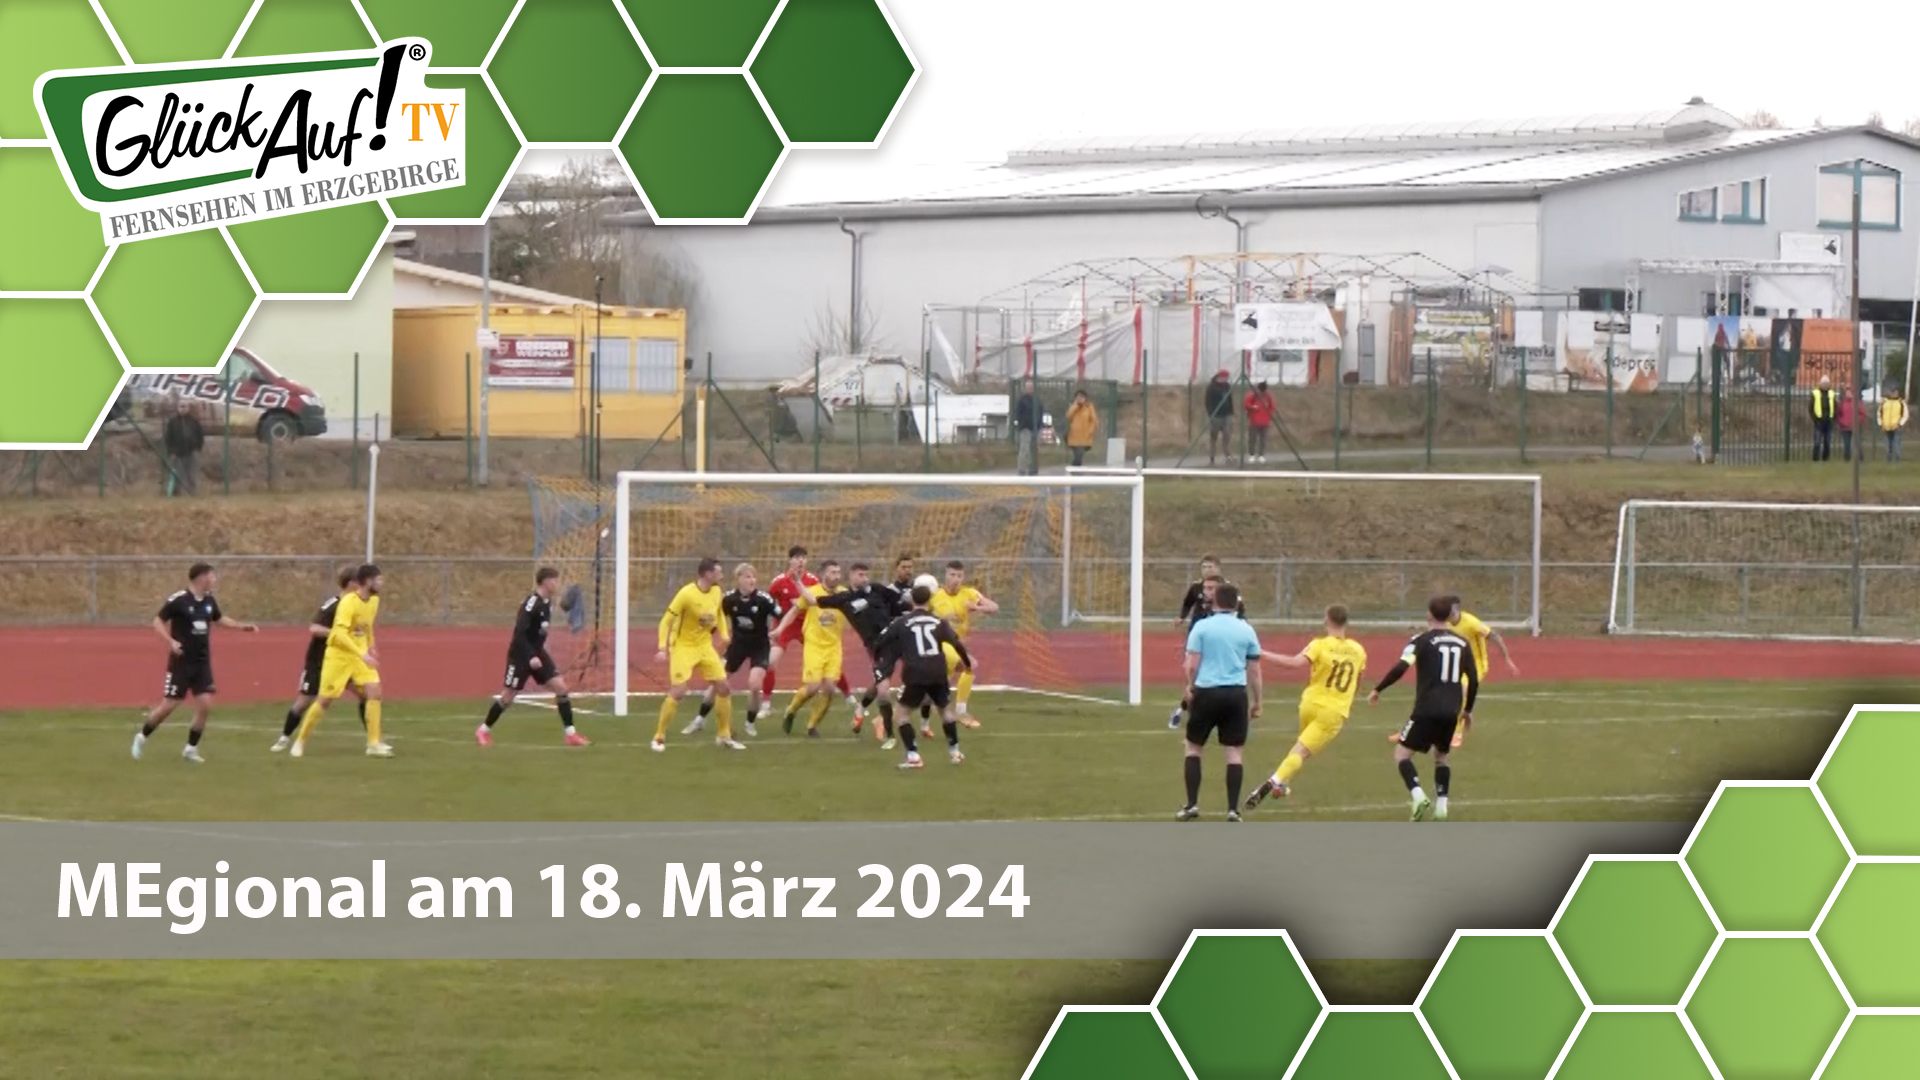 MEgional am 18. März 2024 mit dem Fußballspiel Motor Marienberg gegen den 1 FC Magdeburg